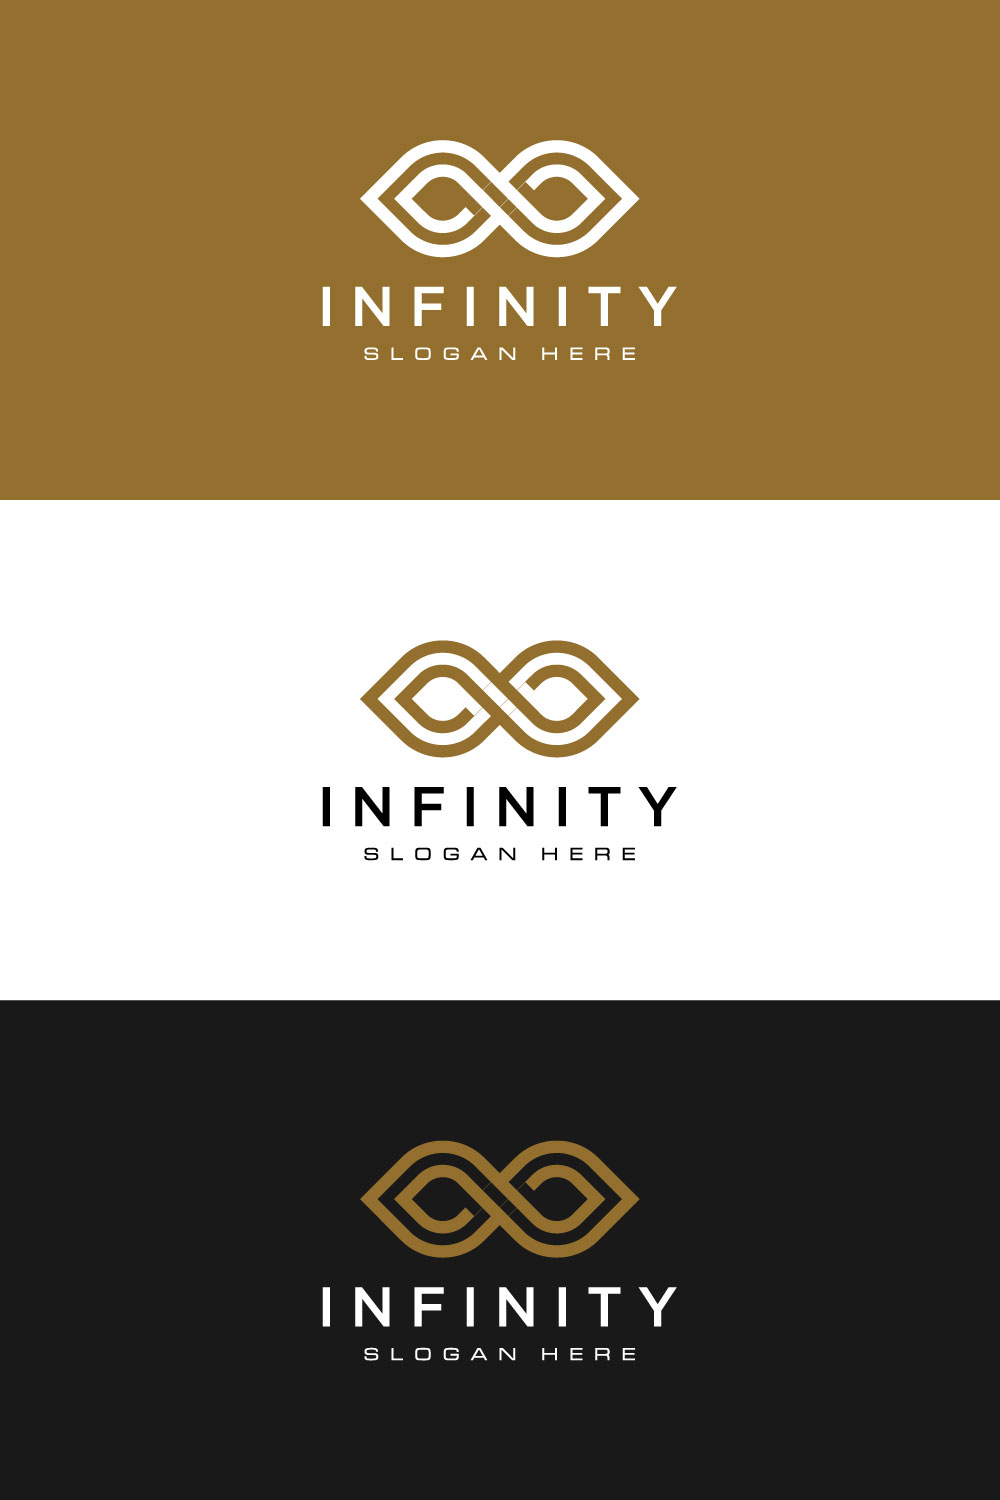 Infinity Loop With Line Art Style Symbol Pinterest Image.